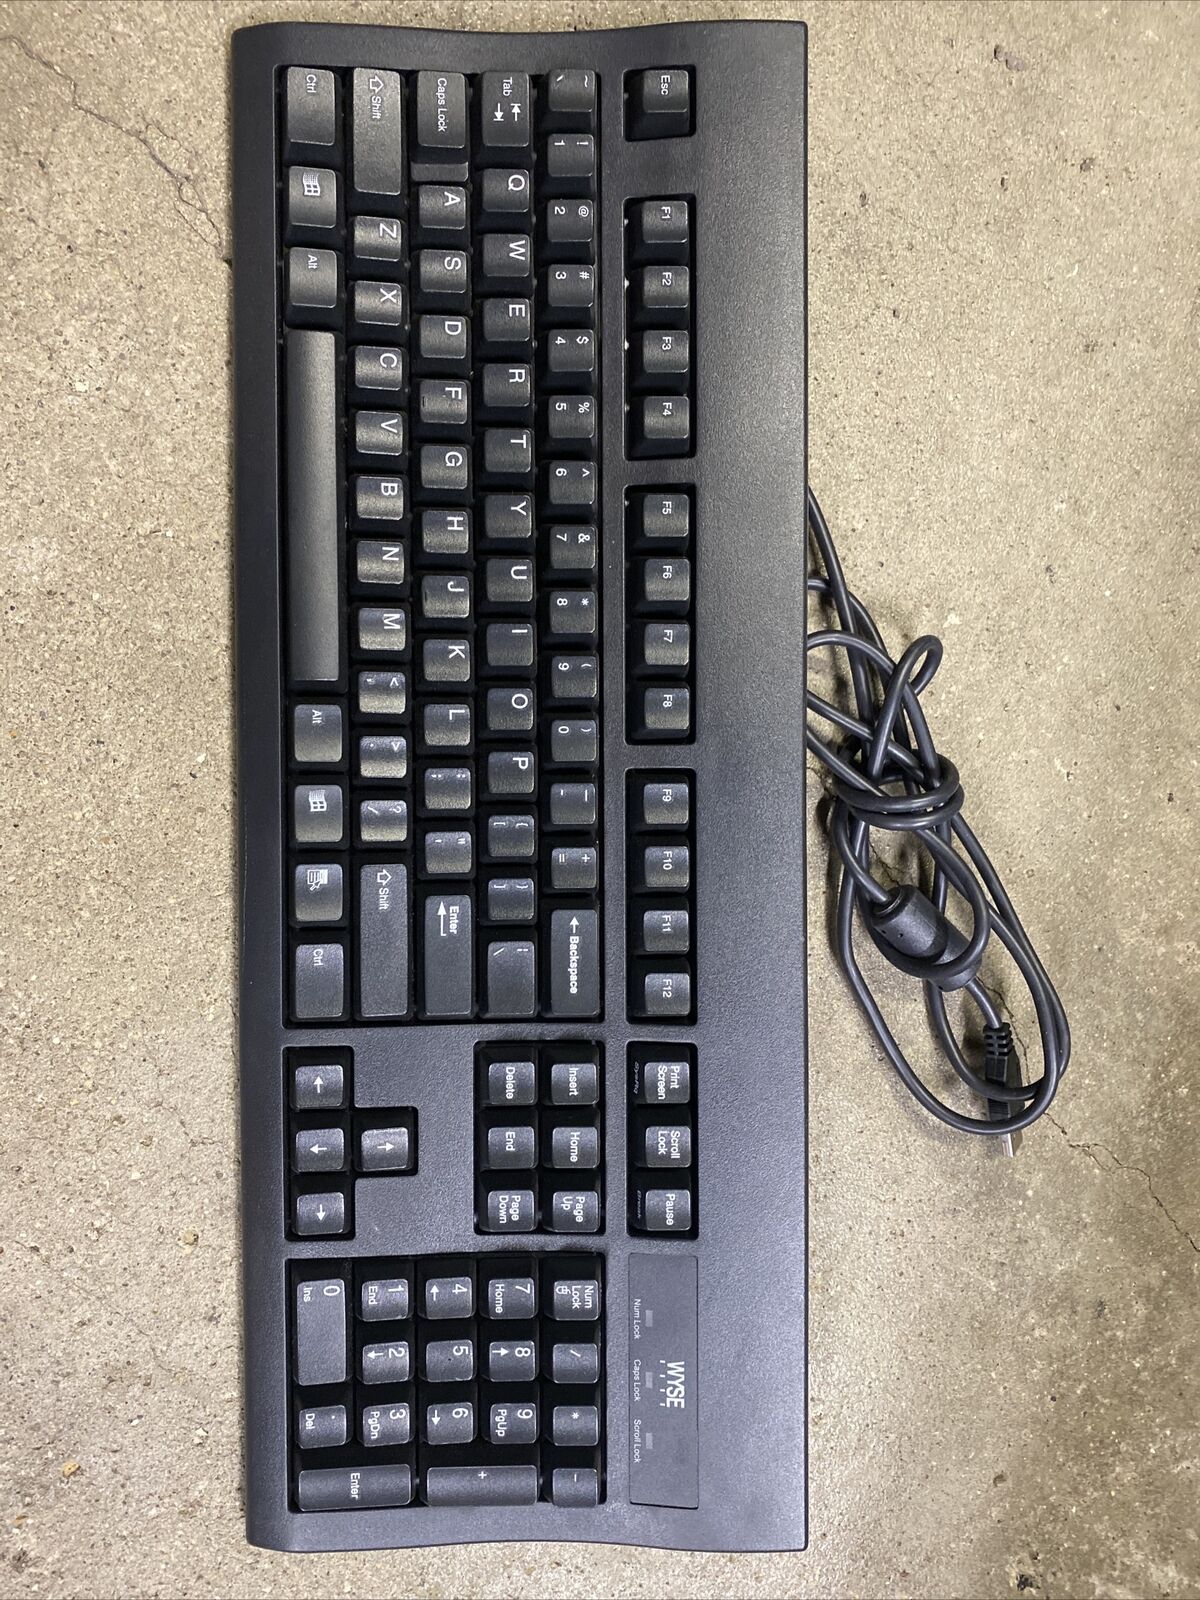 Dell WYSE USB Keyboard with PS/2 Port KU-8933 901716-06L Black